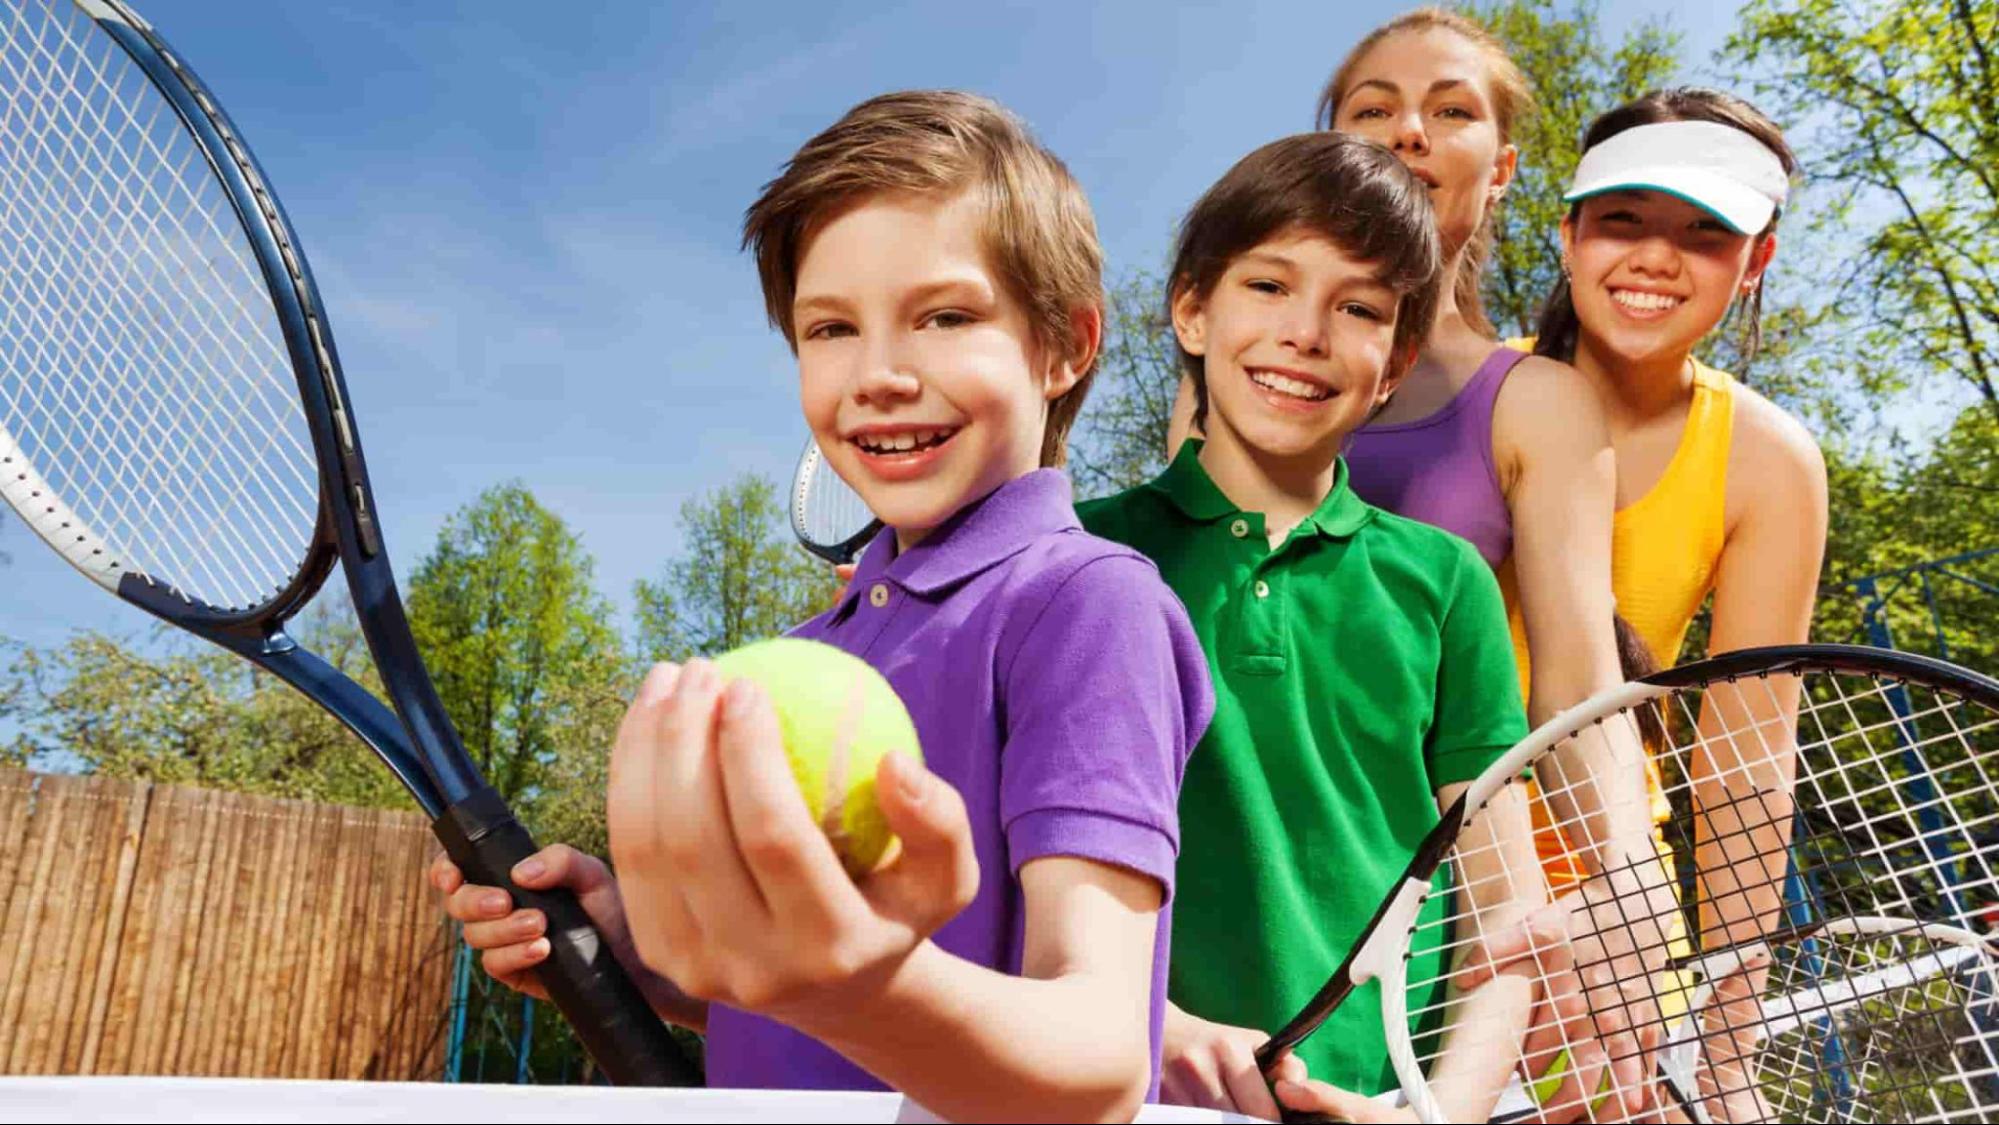 Children Playing Tennis